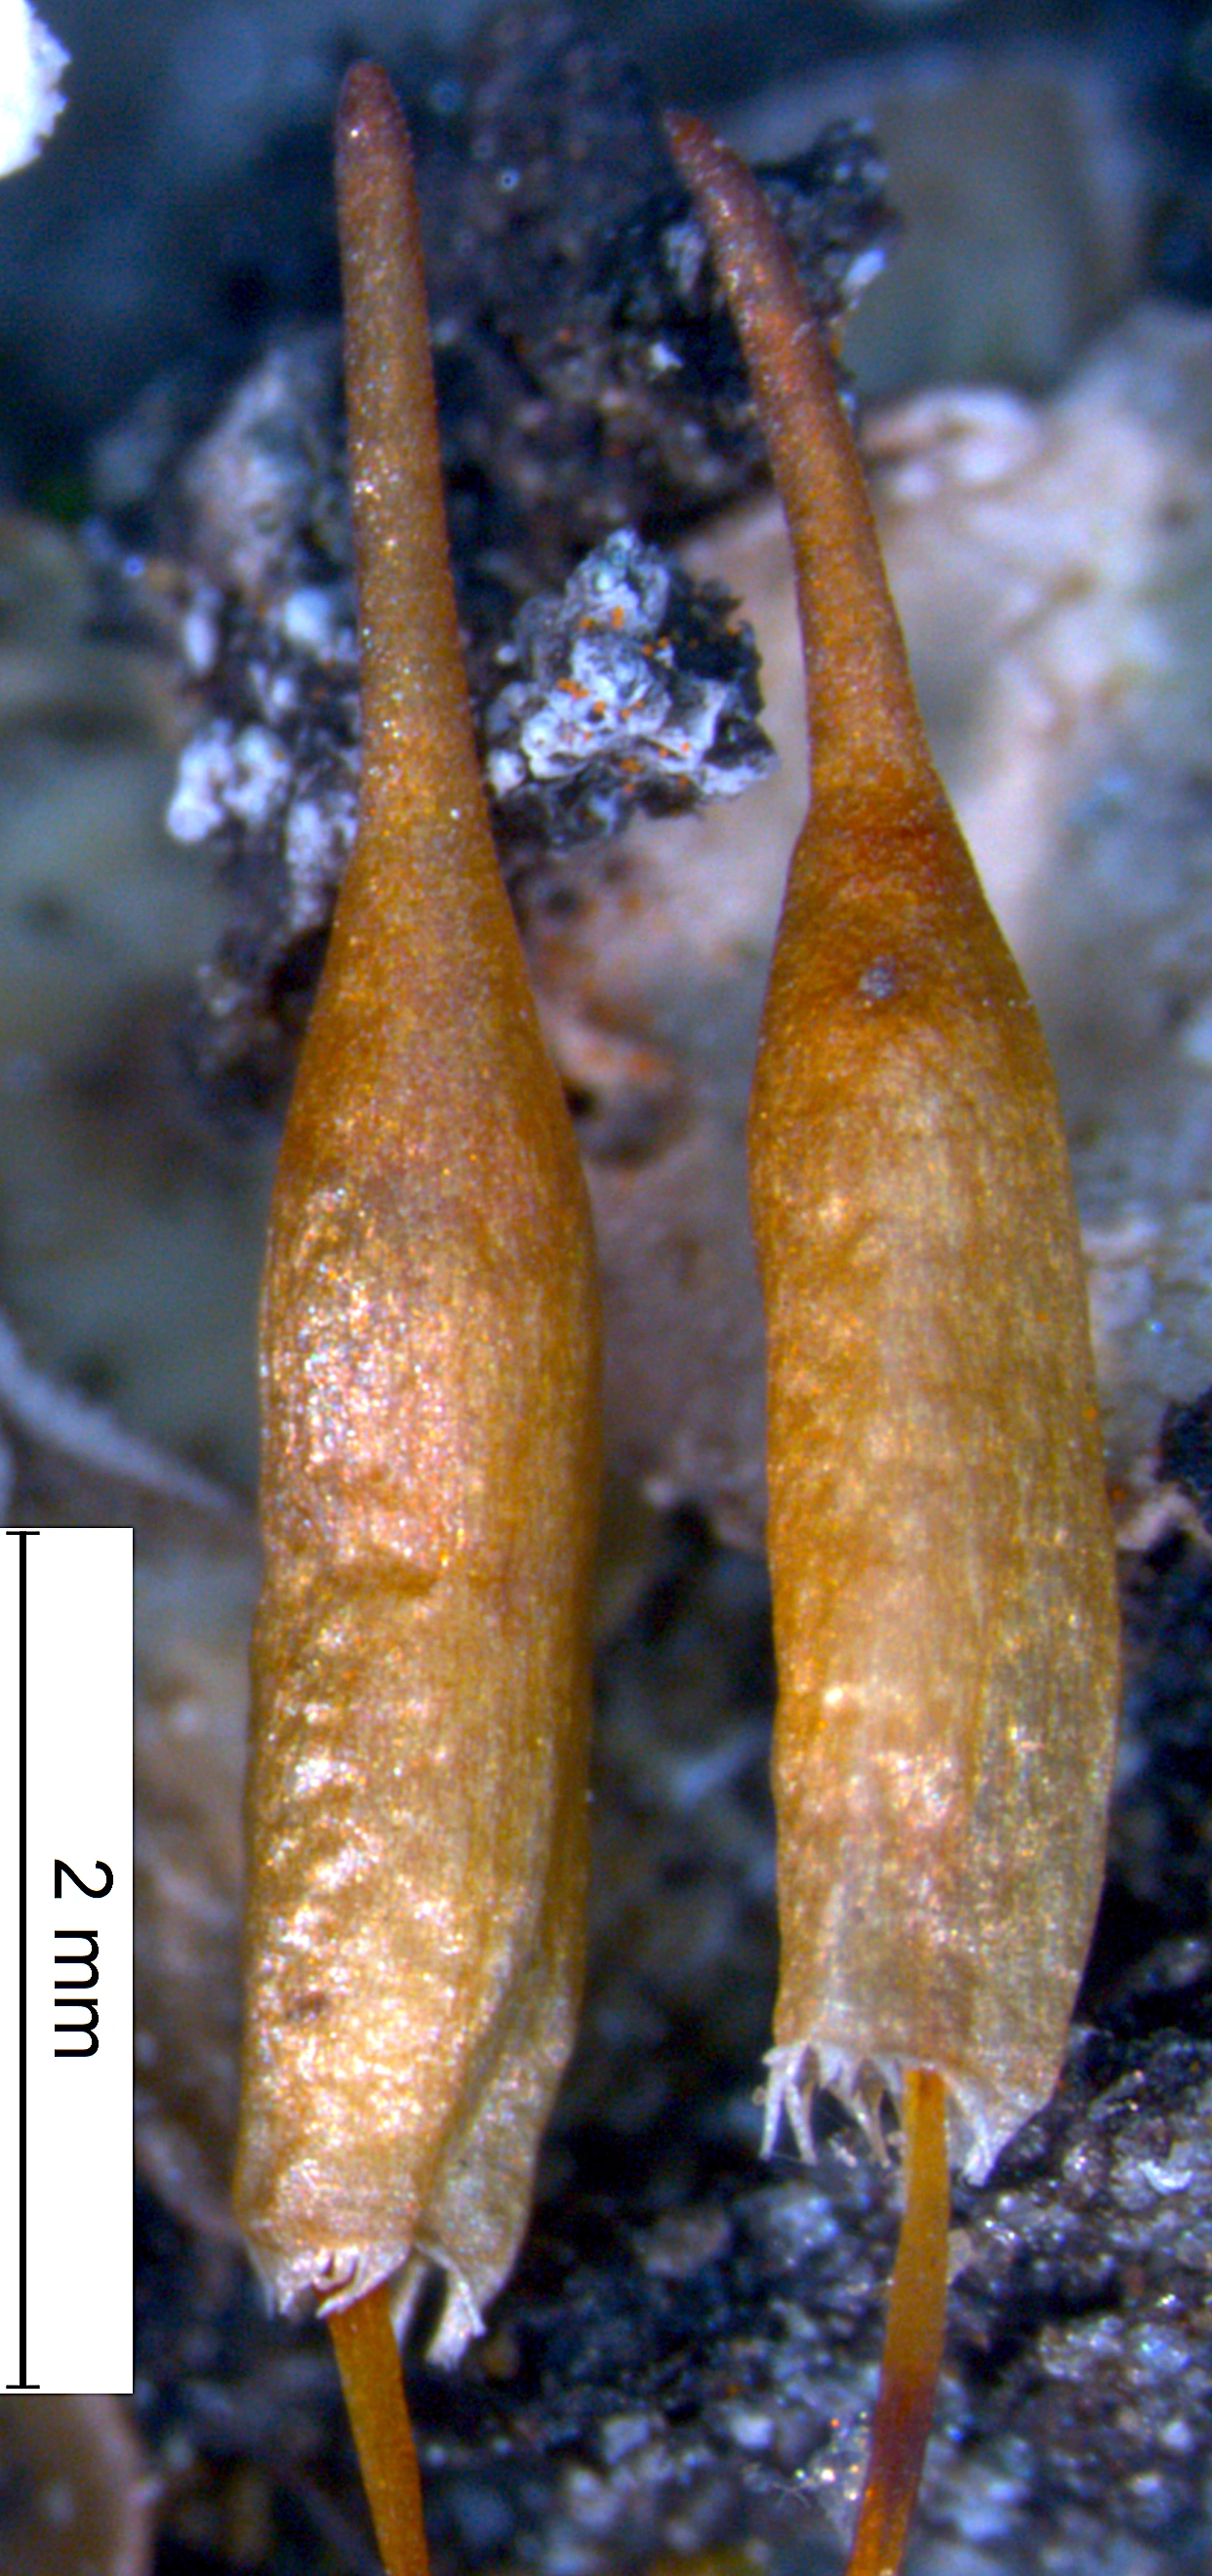 Ruklokkemose. Ruklokkemose: Encalypta affinis macounii.